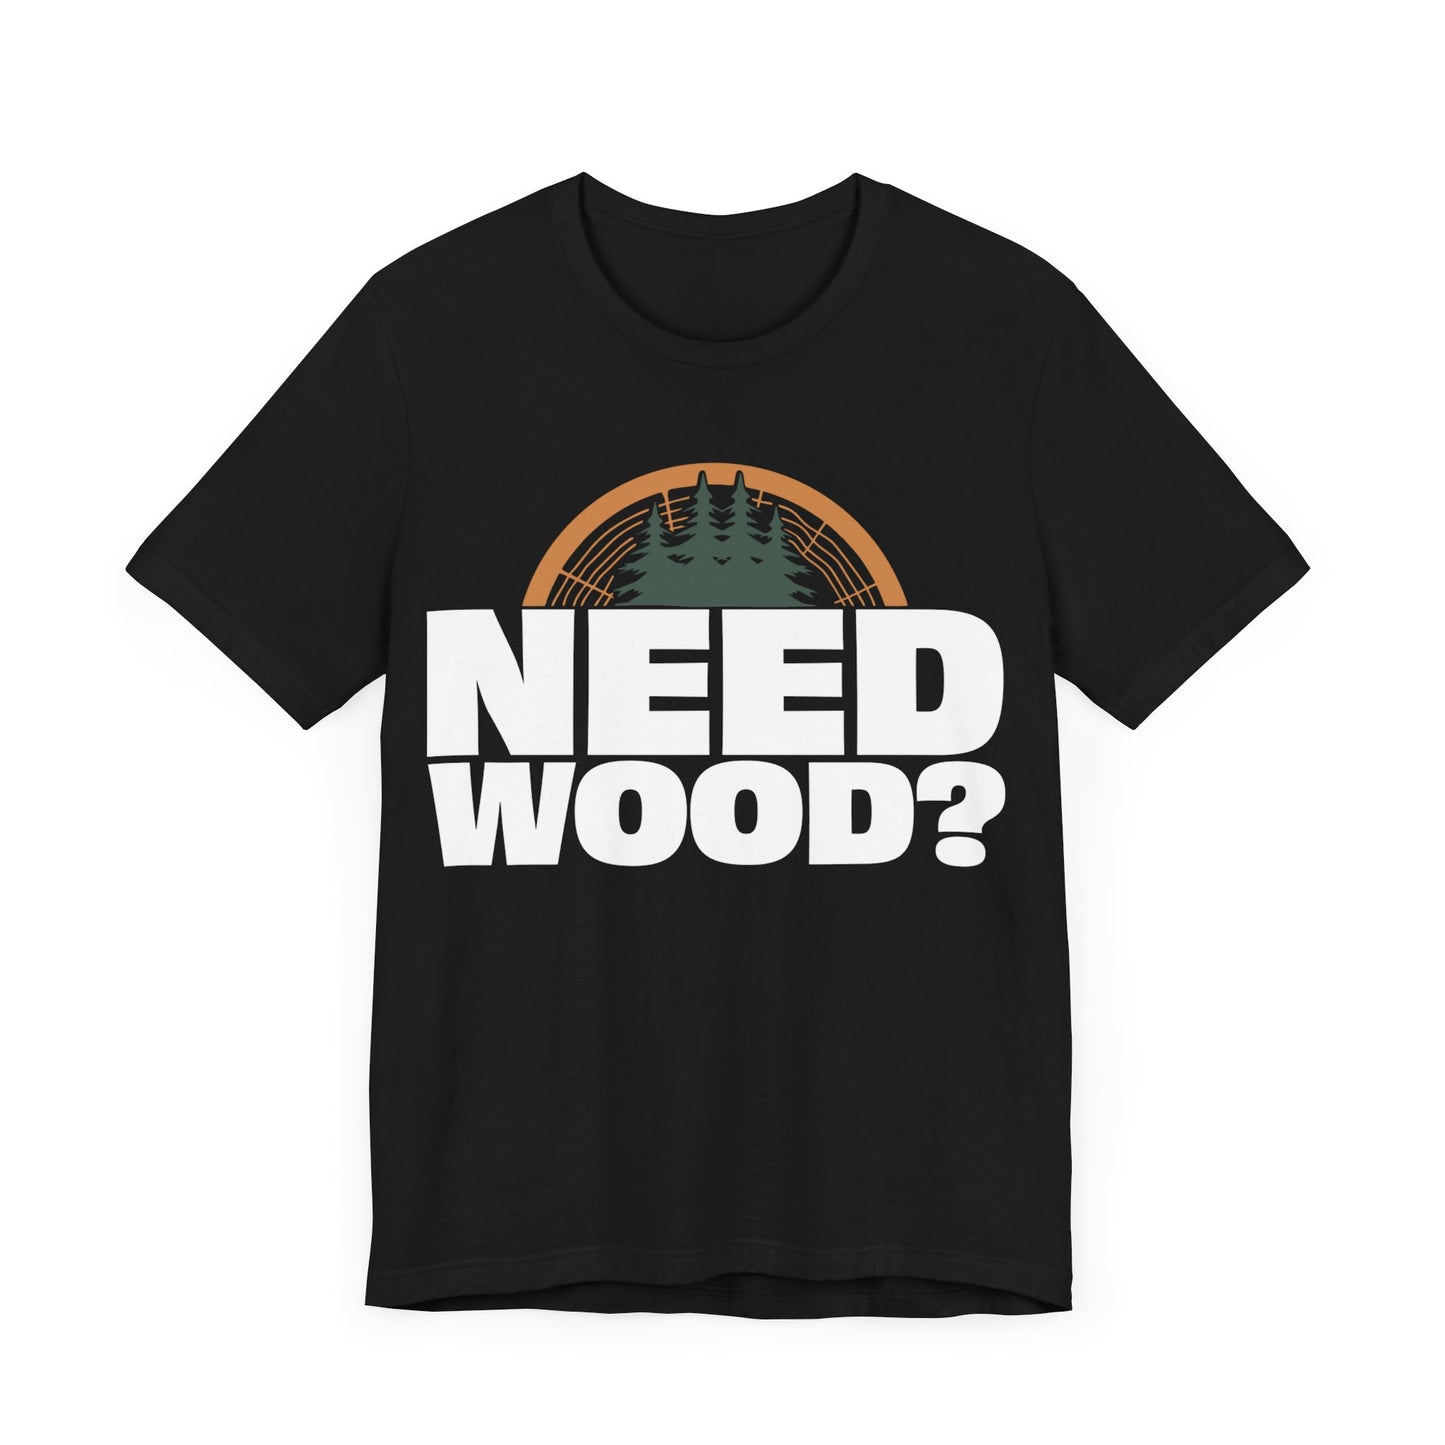 Need Wood? Unisex Jersey Short Sleeve Tee